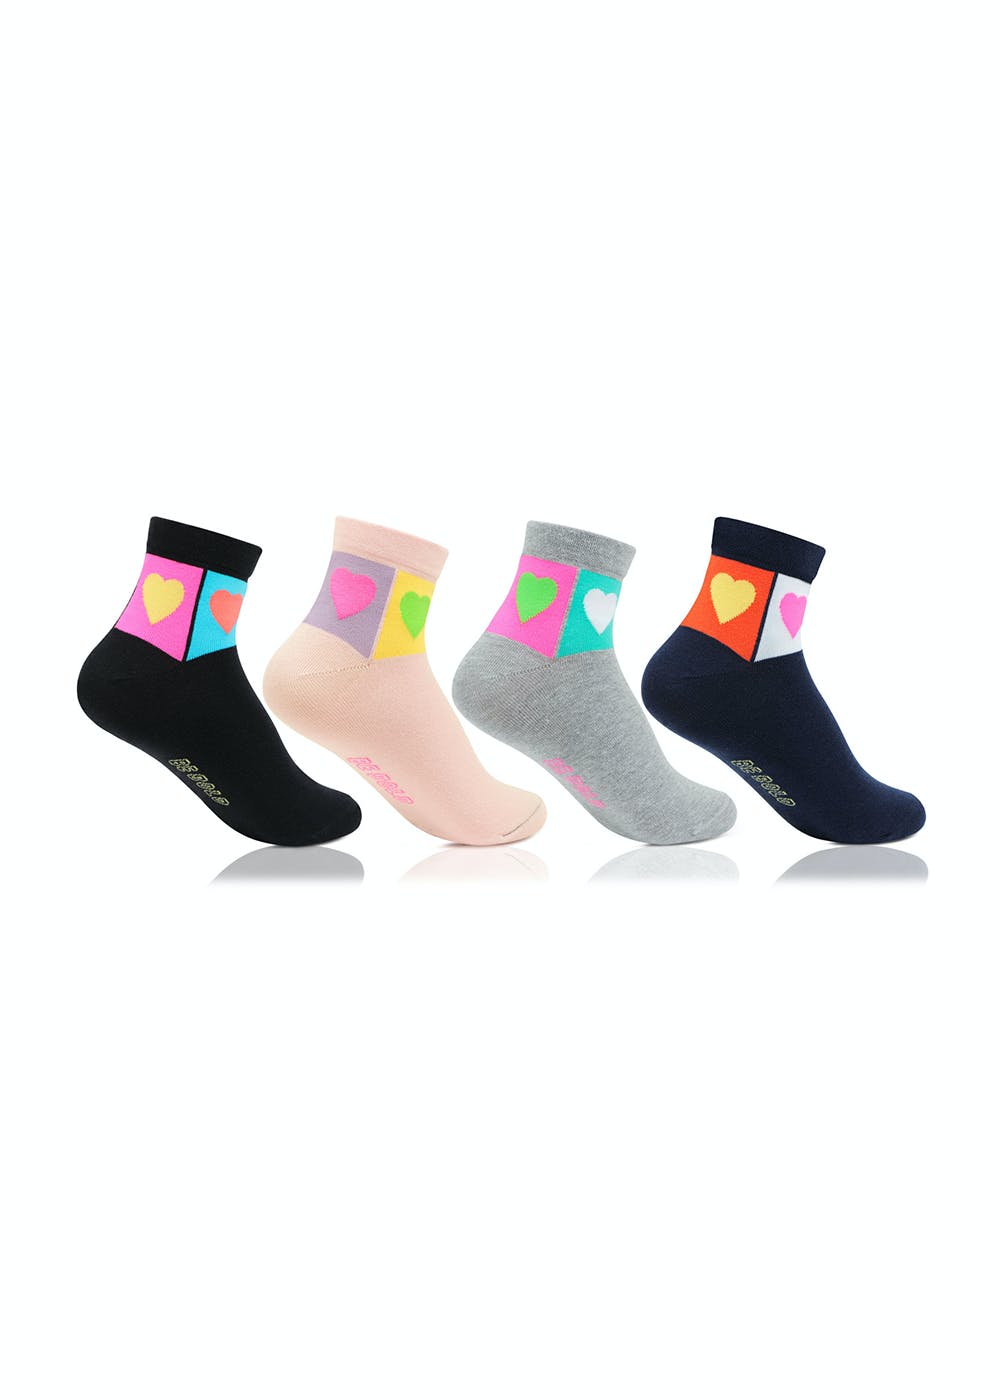 Heart Printed Ankle Length Socks - Pack of 4